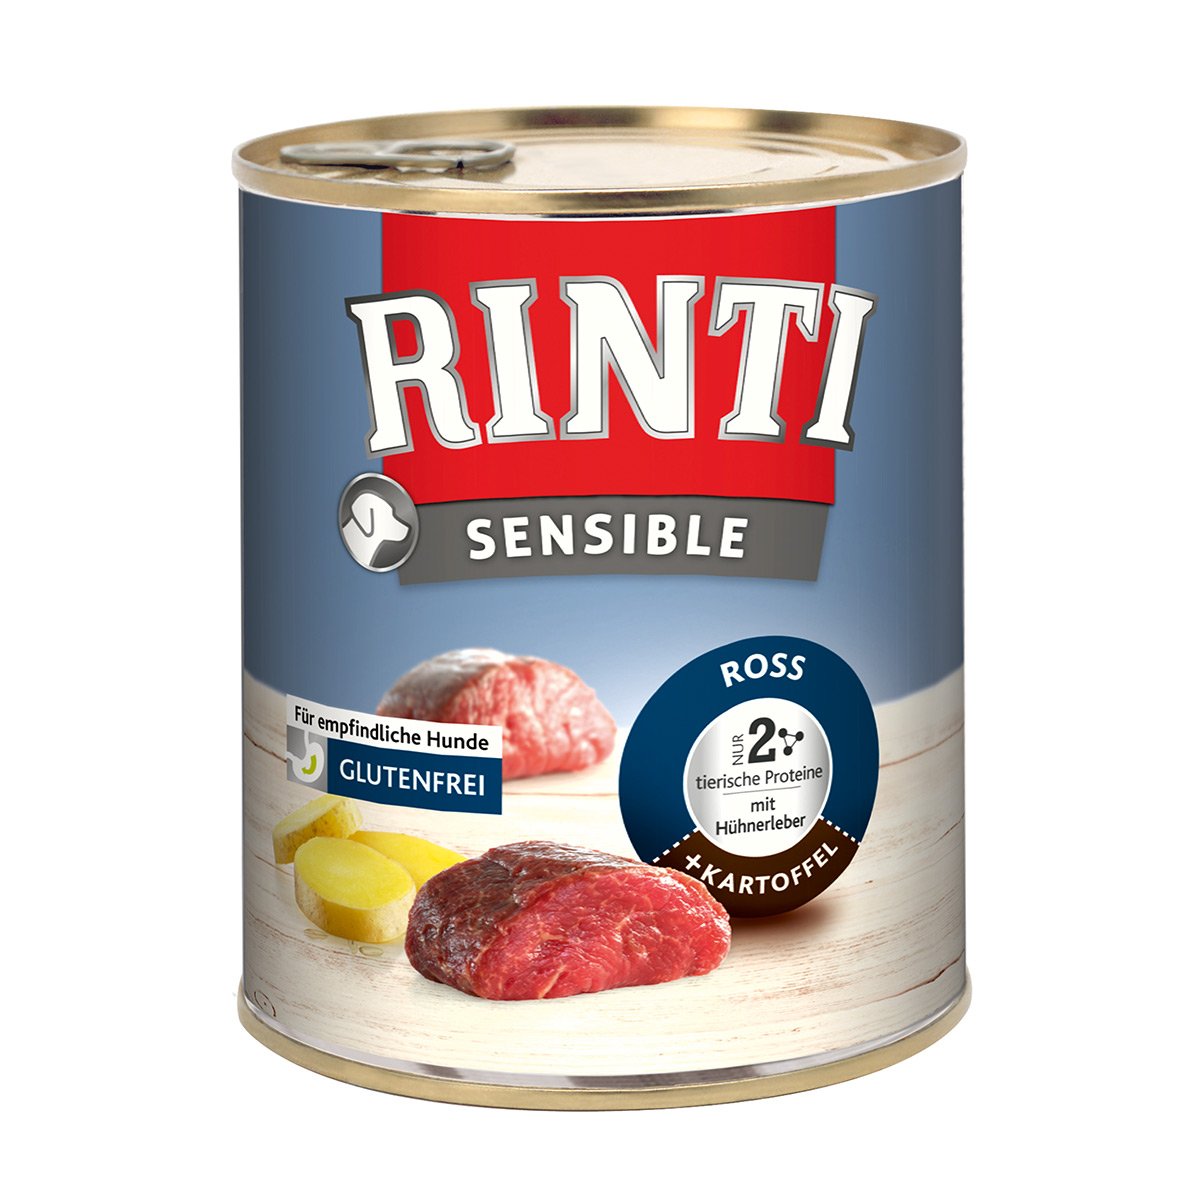 Rinti Sensible Ross & Hühnerleber & Kartoffel 12x800g